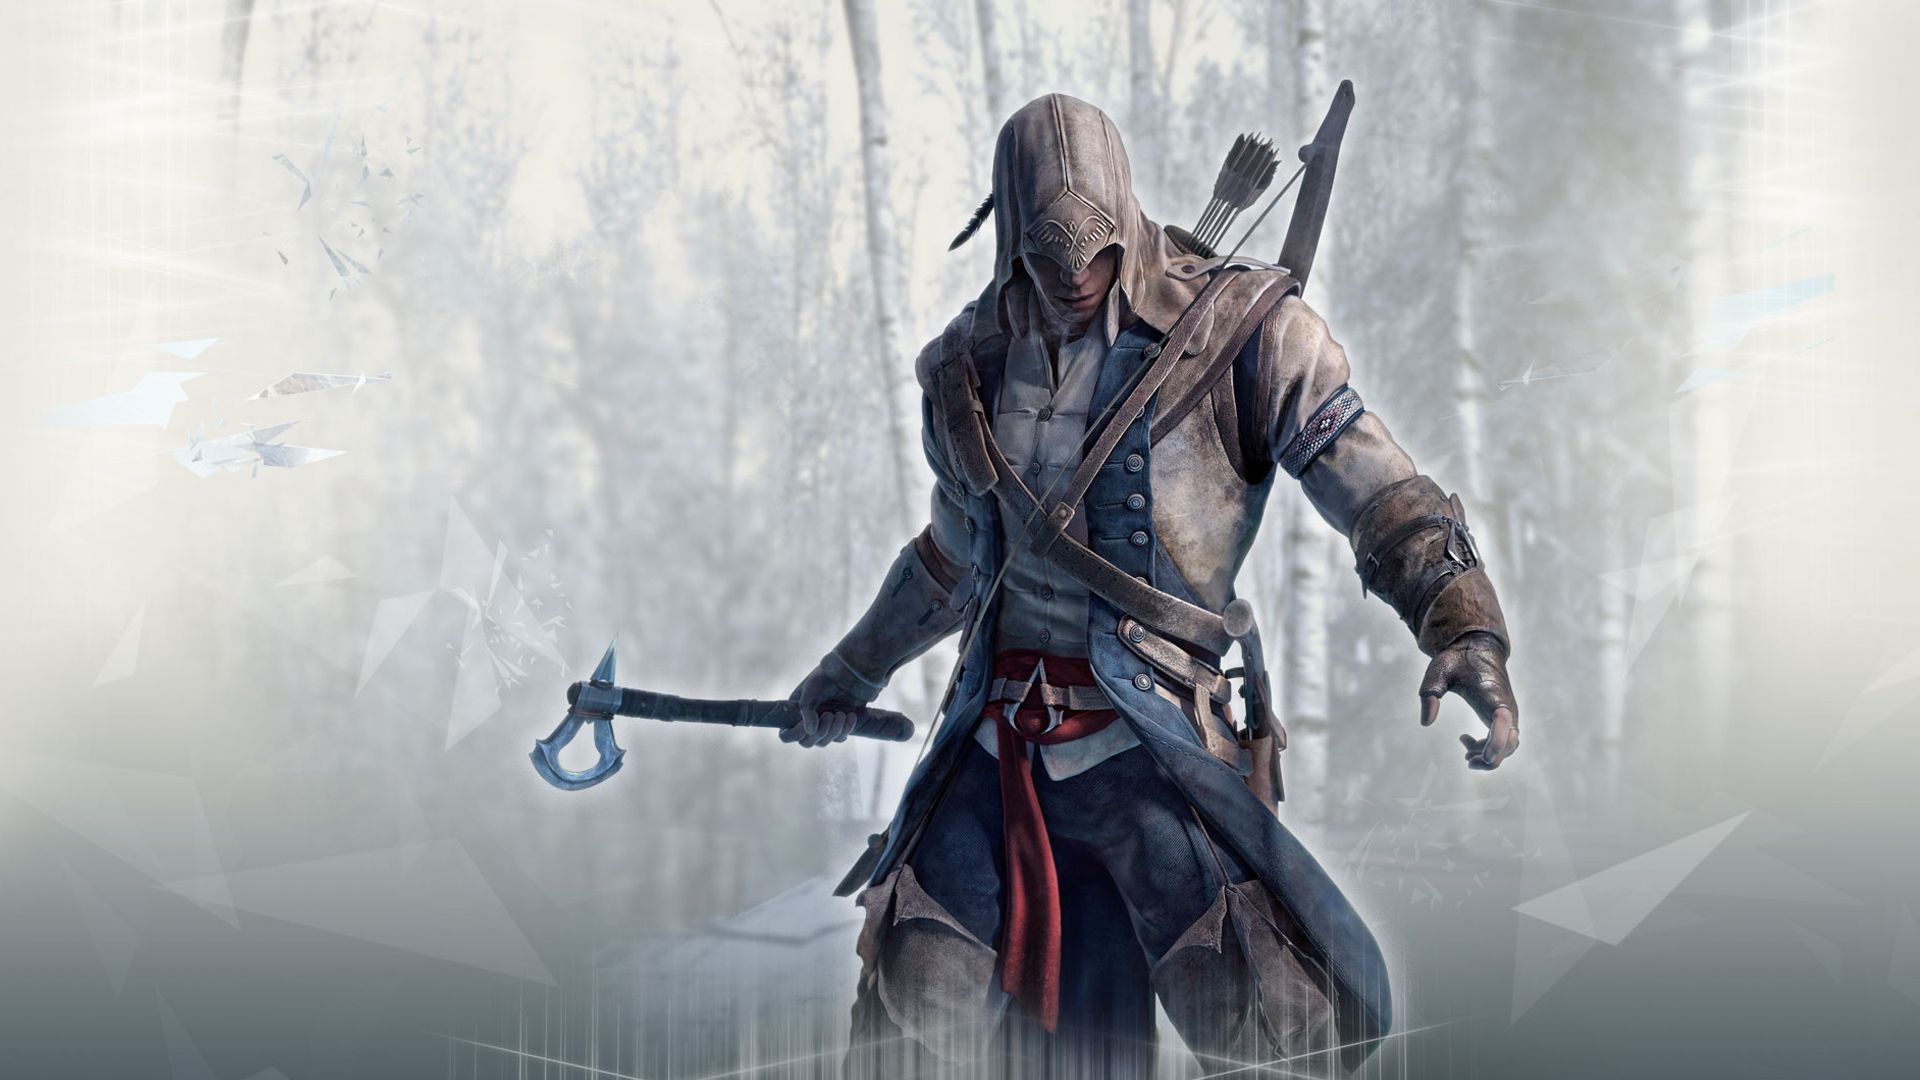 Assassins Creed Wallpaper ① Download Free Cool Full Hd Assassins